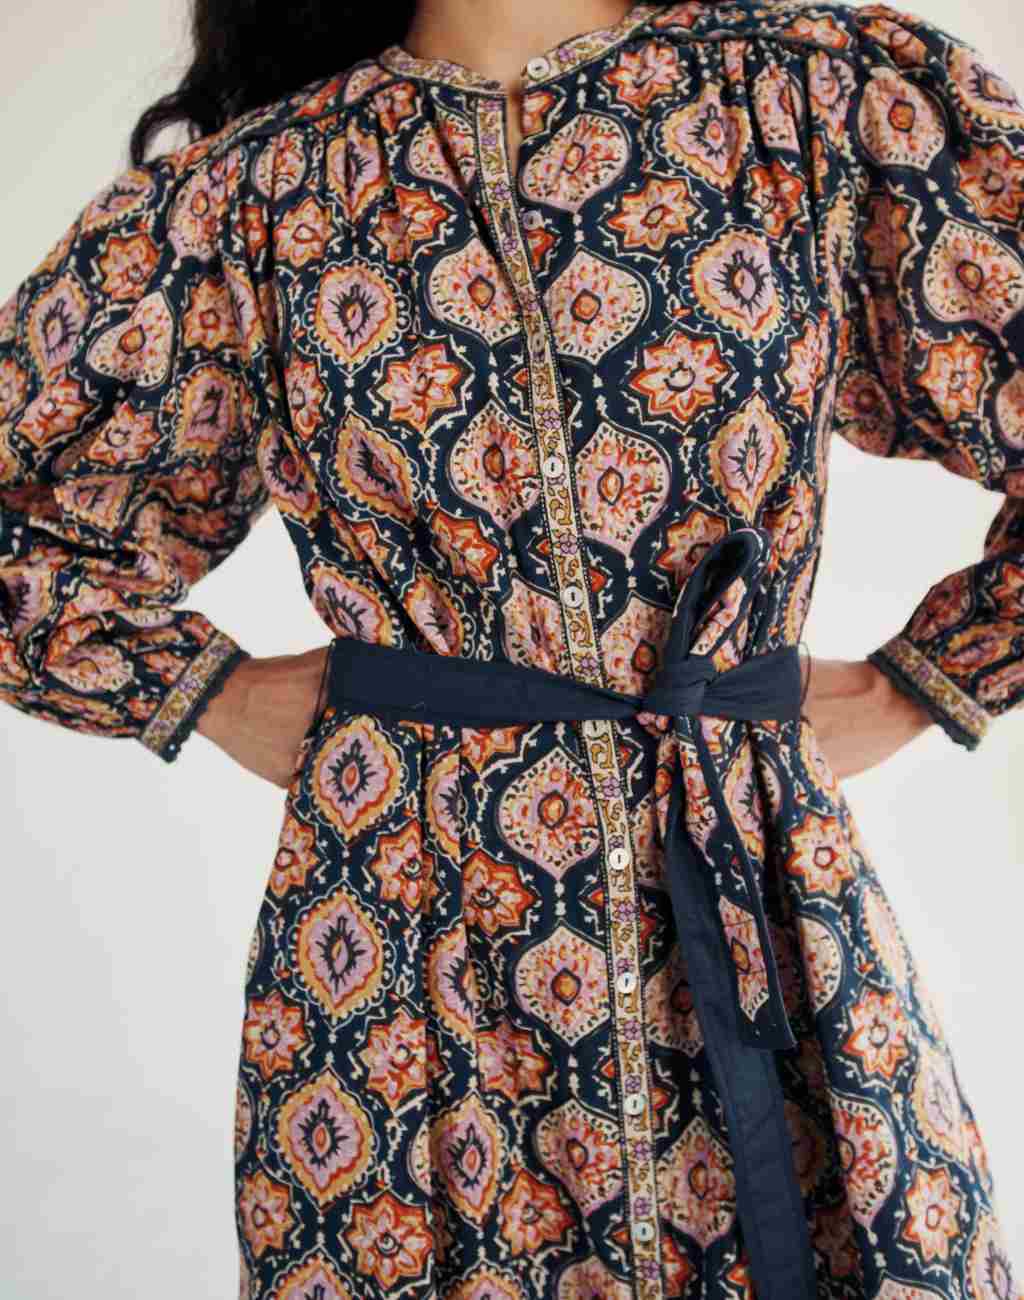 Block Print Shelli Shirtdress with Vibrant Mixed Prints and Padded Patchwork Yoke - Visit Nifty Louise Misha 